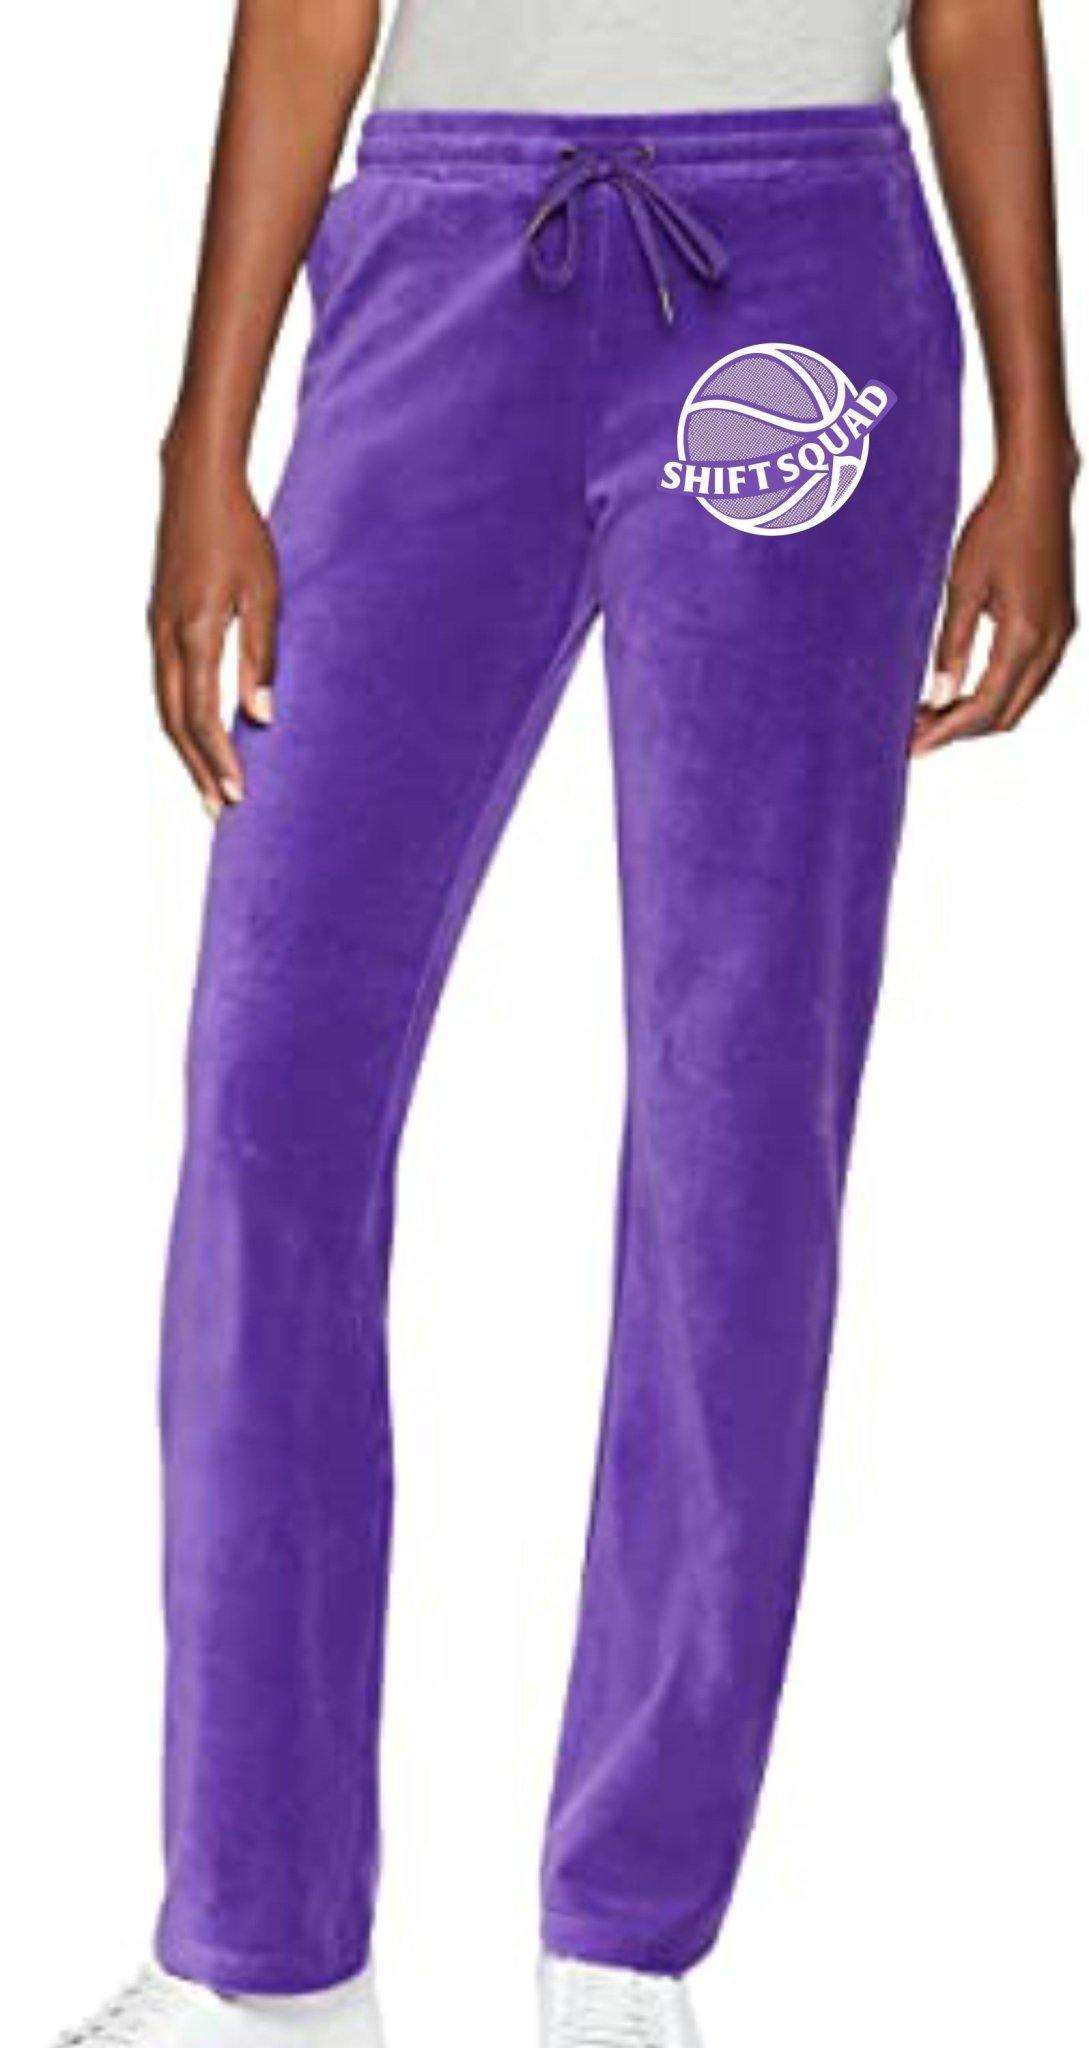 Purple and White Shiftsquad Women's Sweatpants Fall and Winter Line - Shiftsquad